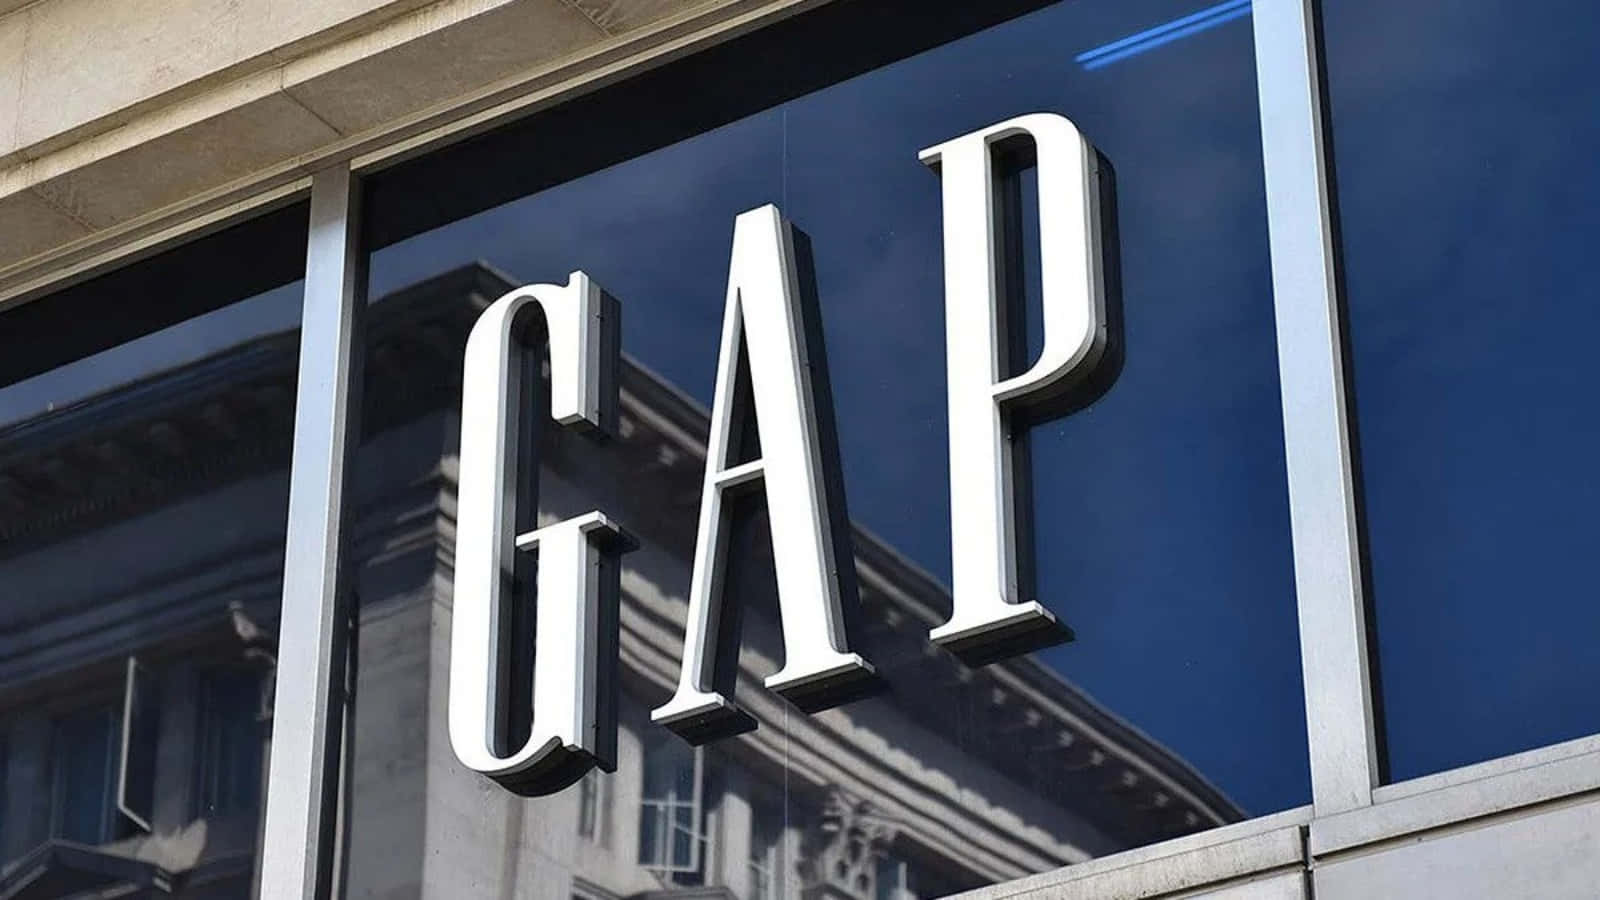 gap - a logo on a building